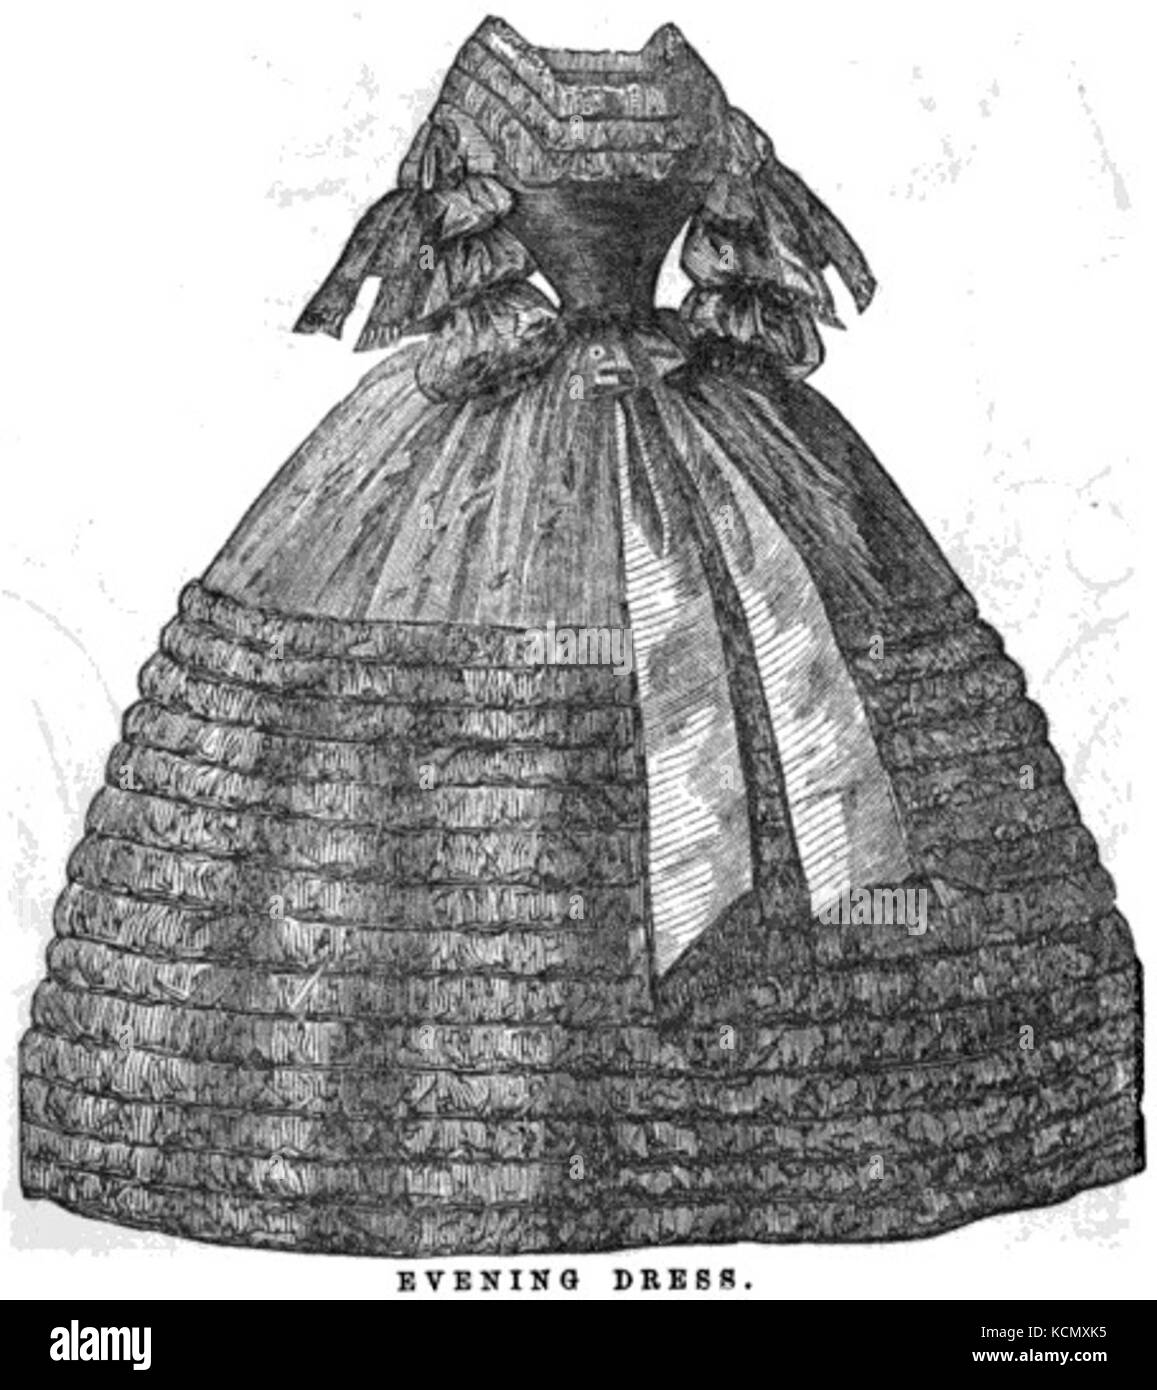 Evening Dress from 1860 Stock Photo - Alamy